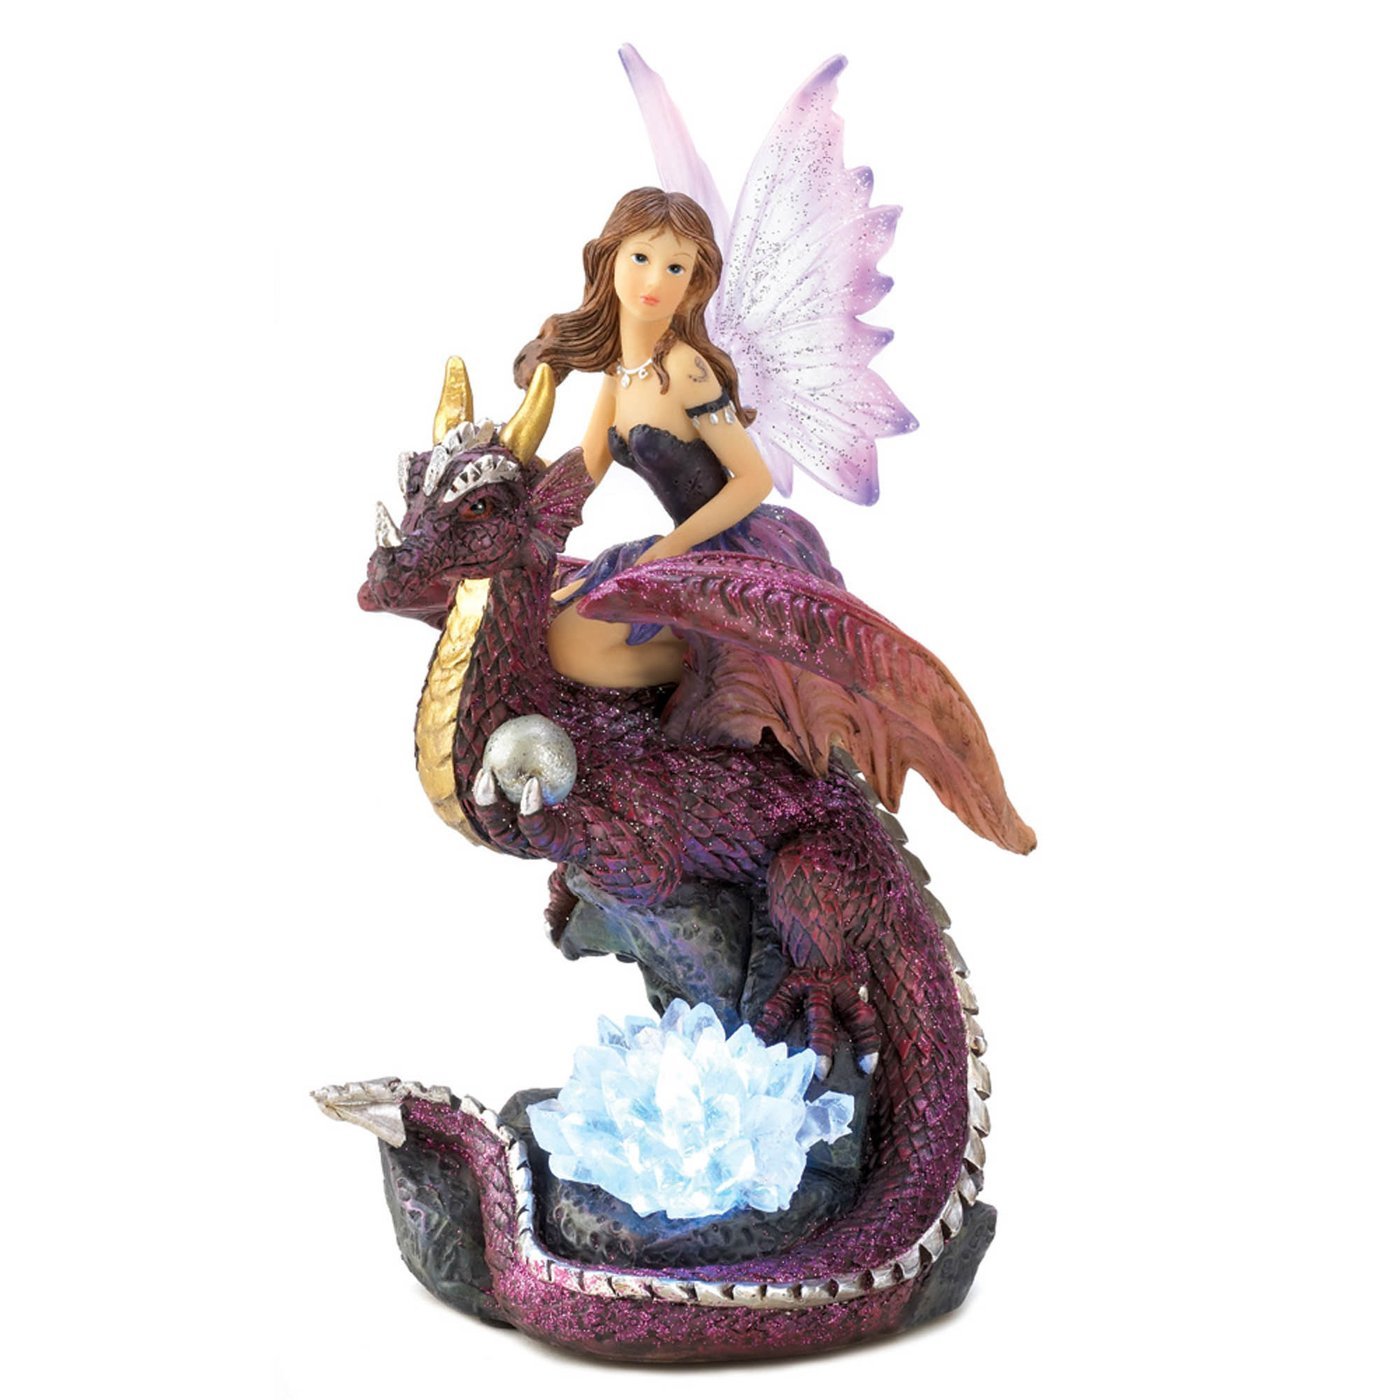 Dragon Rider Figurine - $26.35